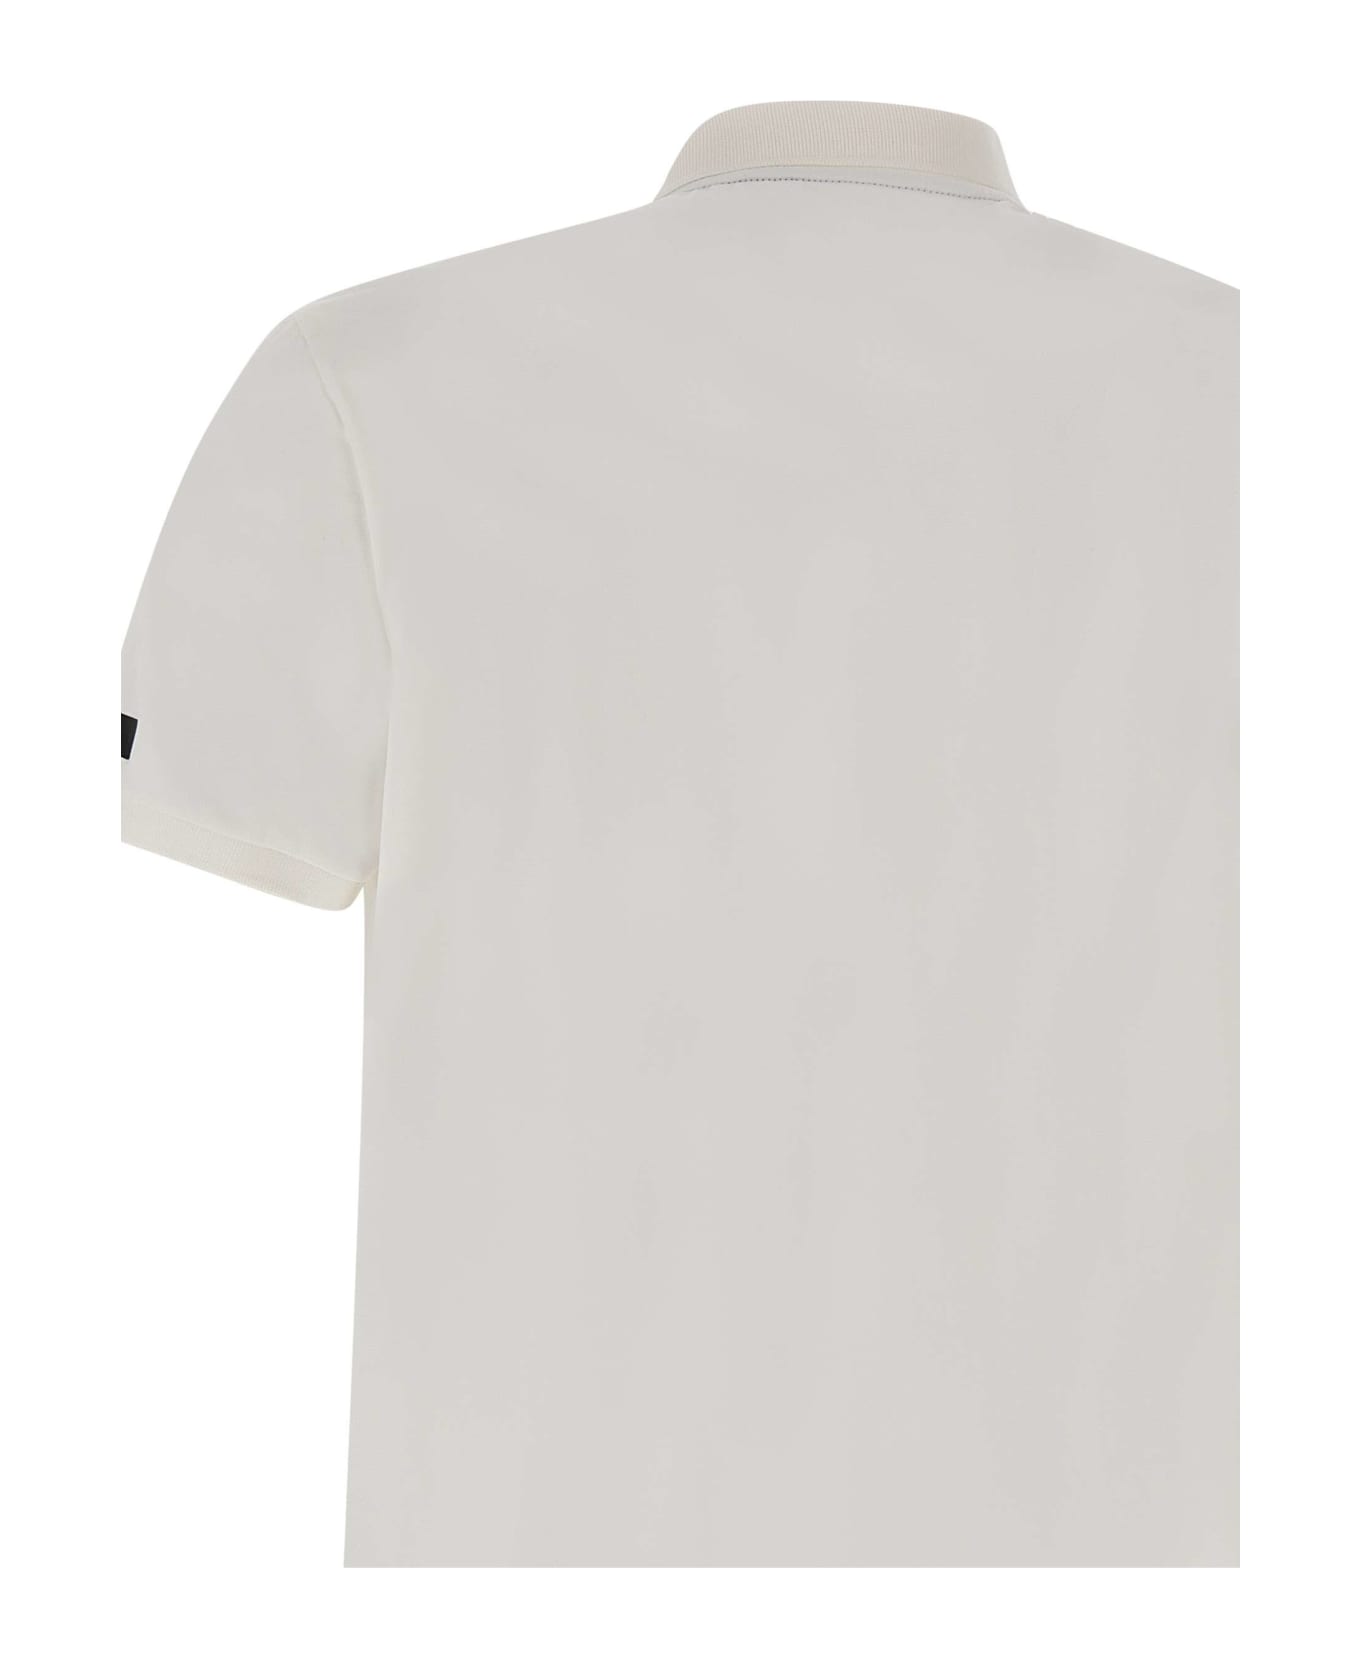 RRD - Roberto Ricci Design 'gdy' Oxford Cotton Polo Shirt - Bianco ポロシャツ